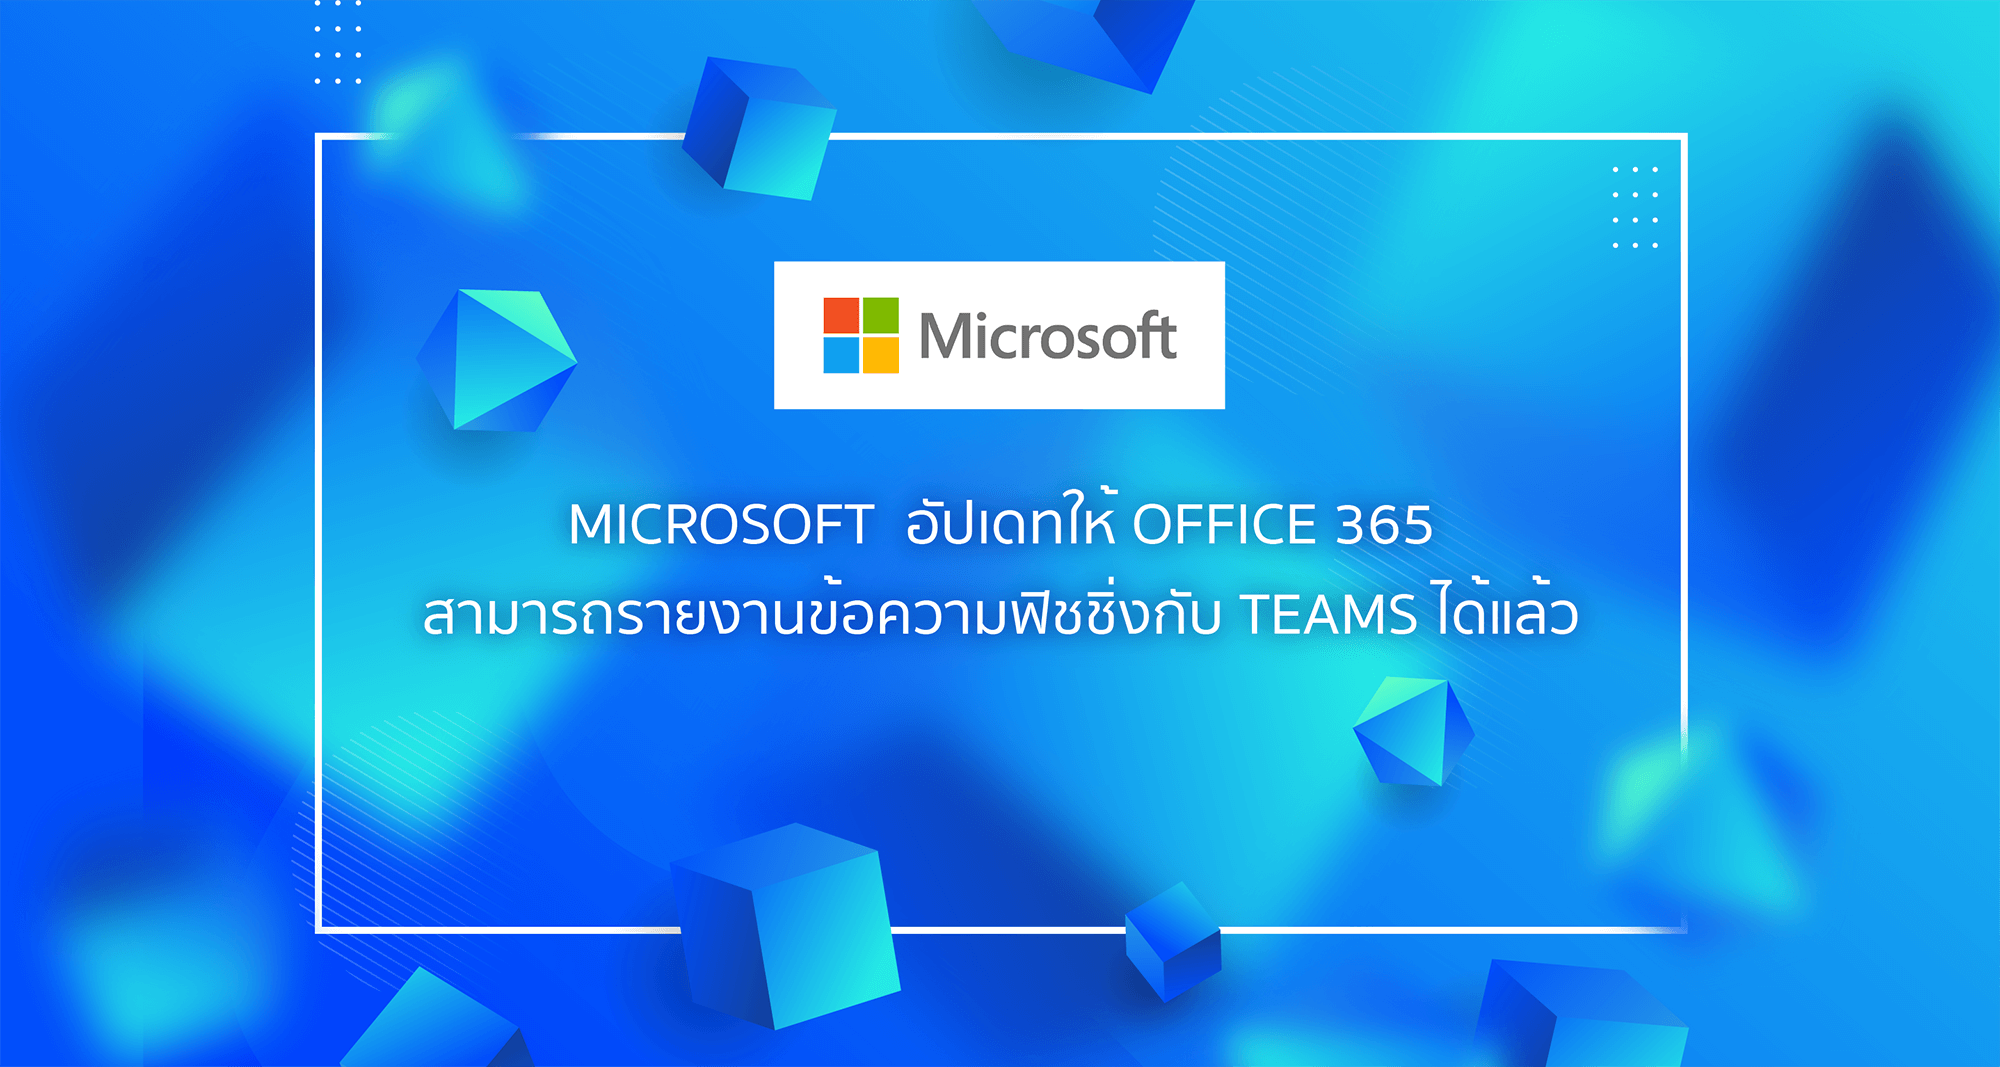 Microsoft  อัปเดทให้ Office 365 สามารถรายงานข้อความฟิชชิ่งกับ Teams ได้แล้ว